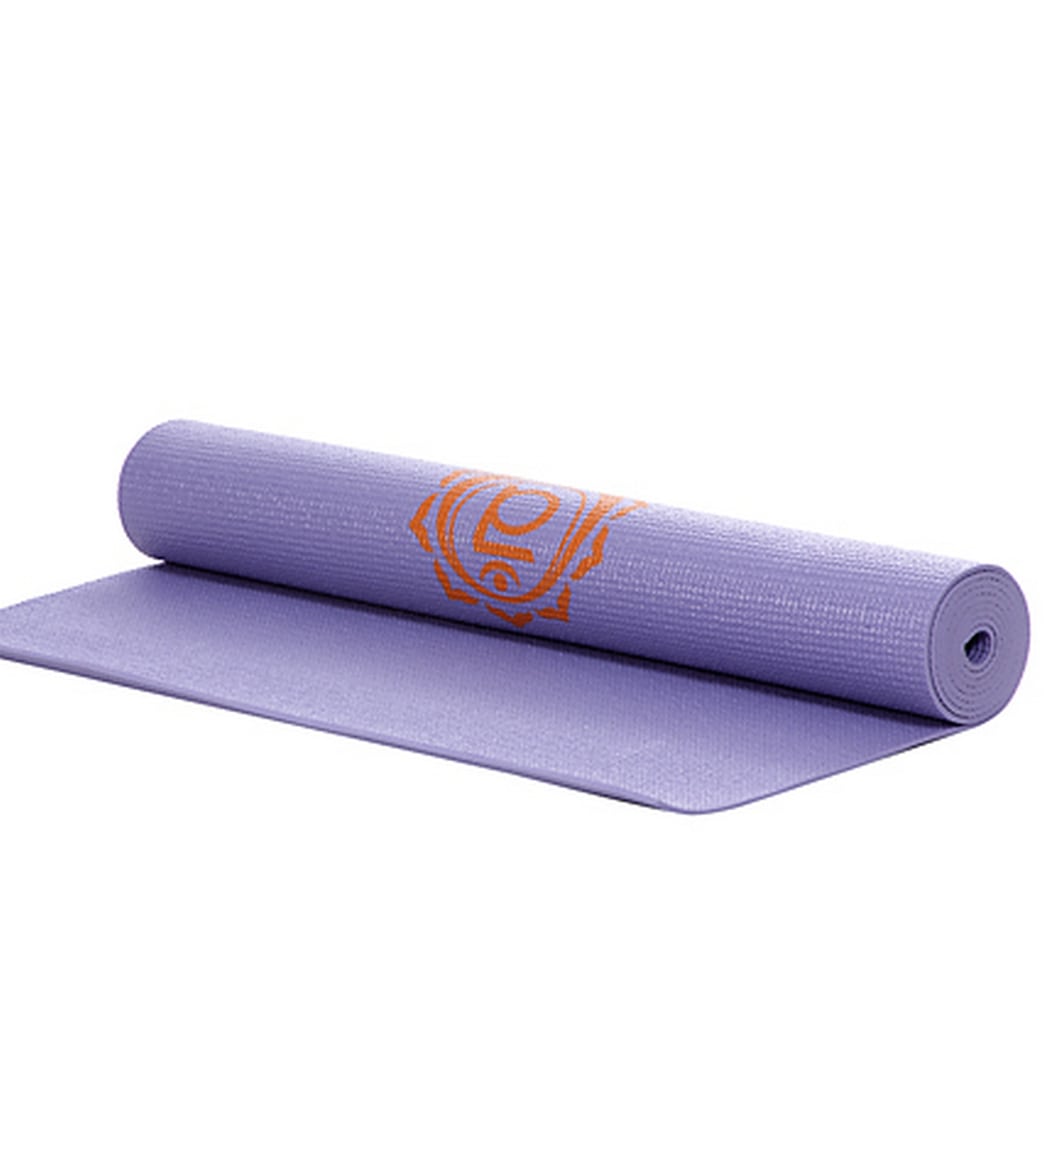 Gaiam Gaiam Sagebrush Yoga Mat 5mm Solid - Sports Equipment 